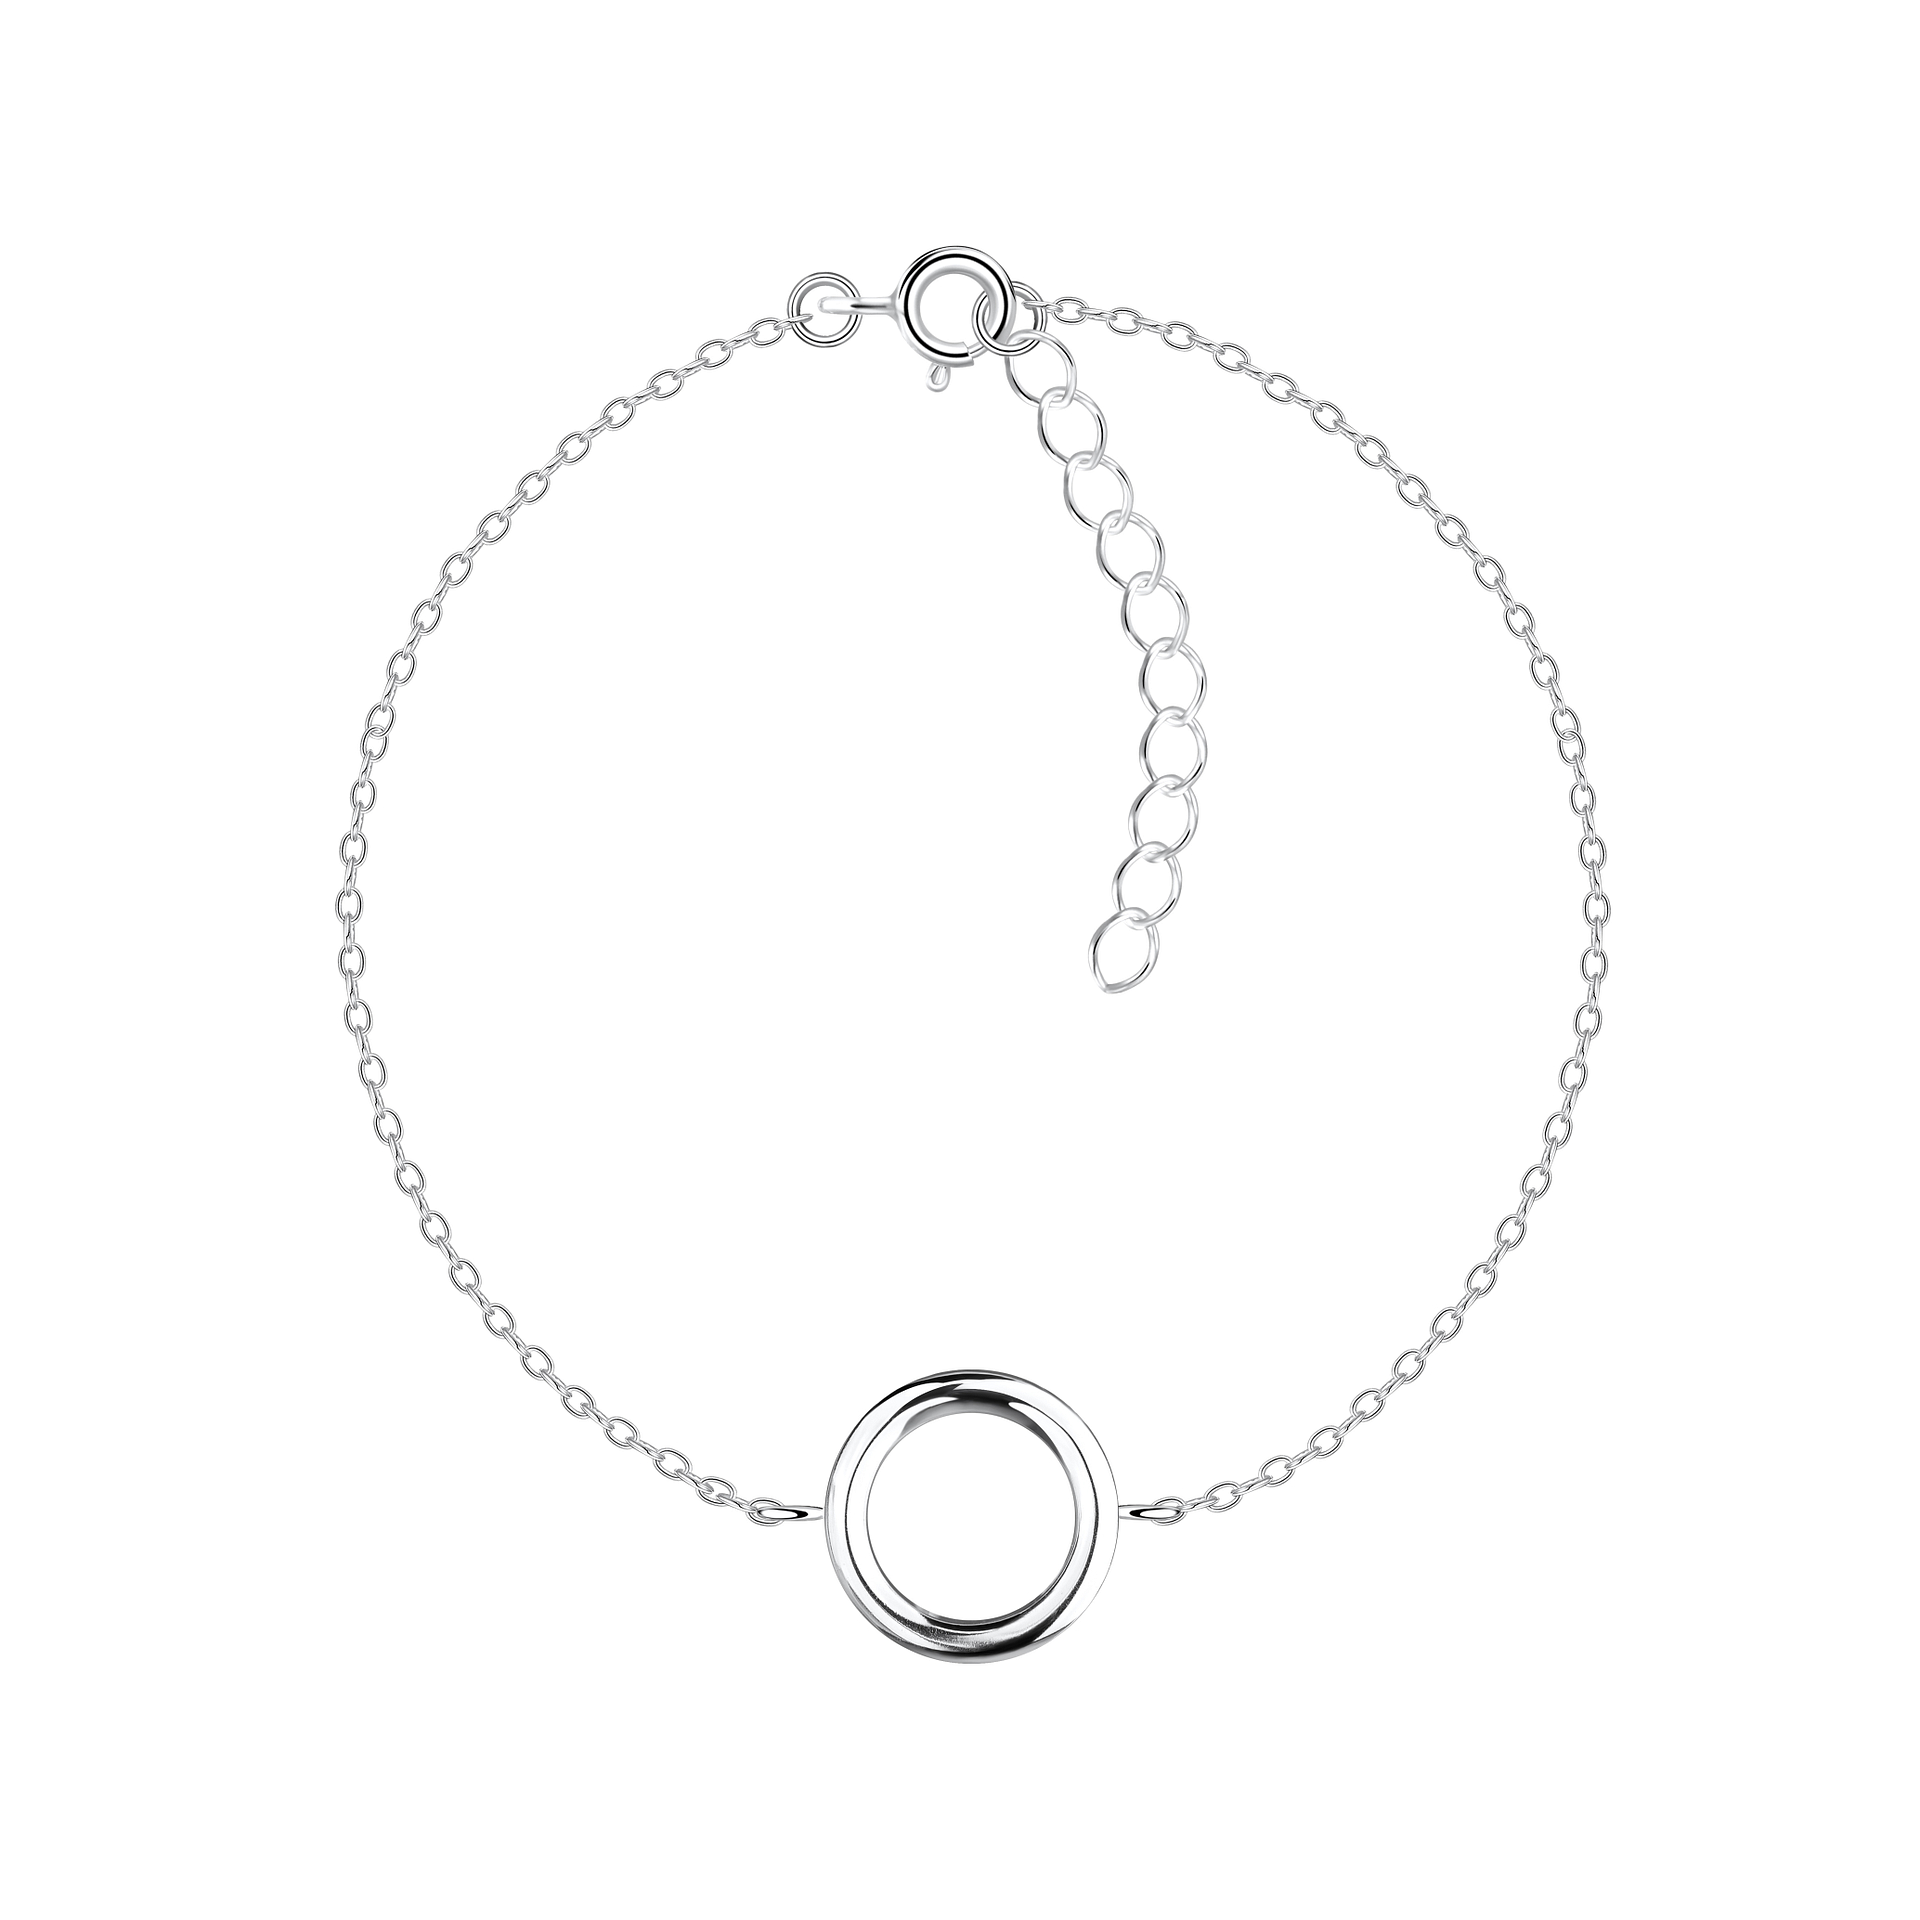 Silver Jewelry Silver Circle Bracelet